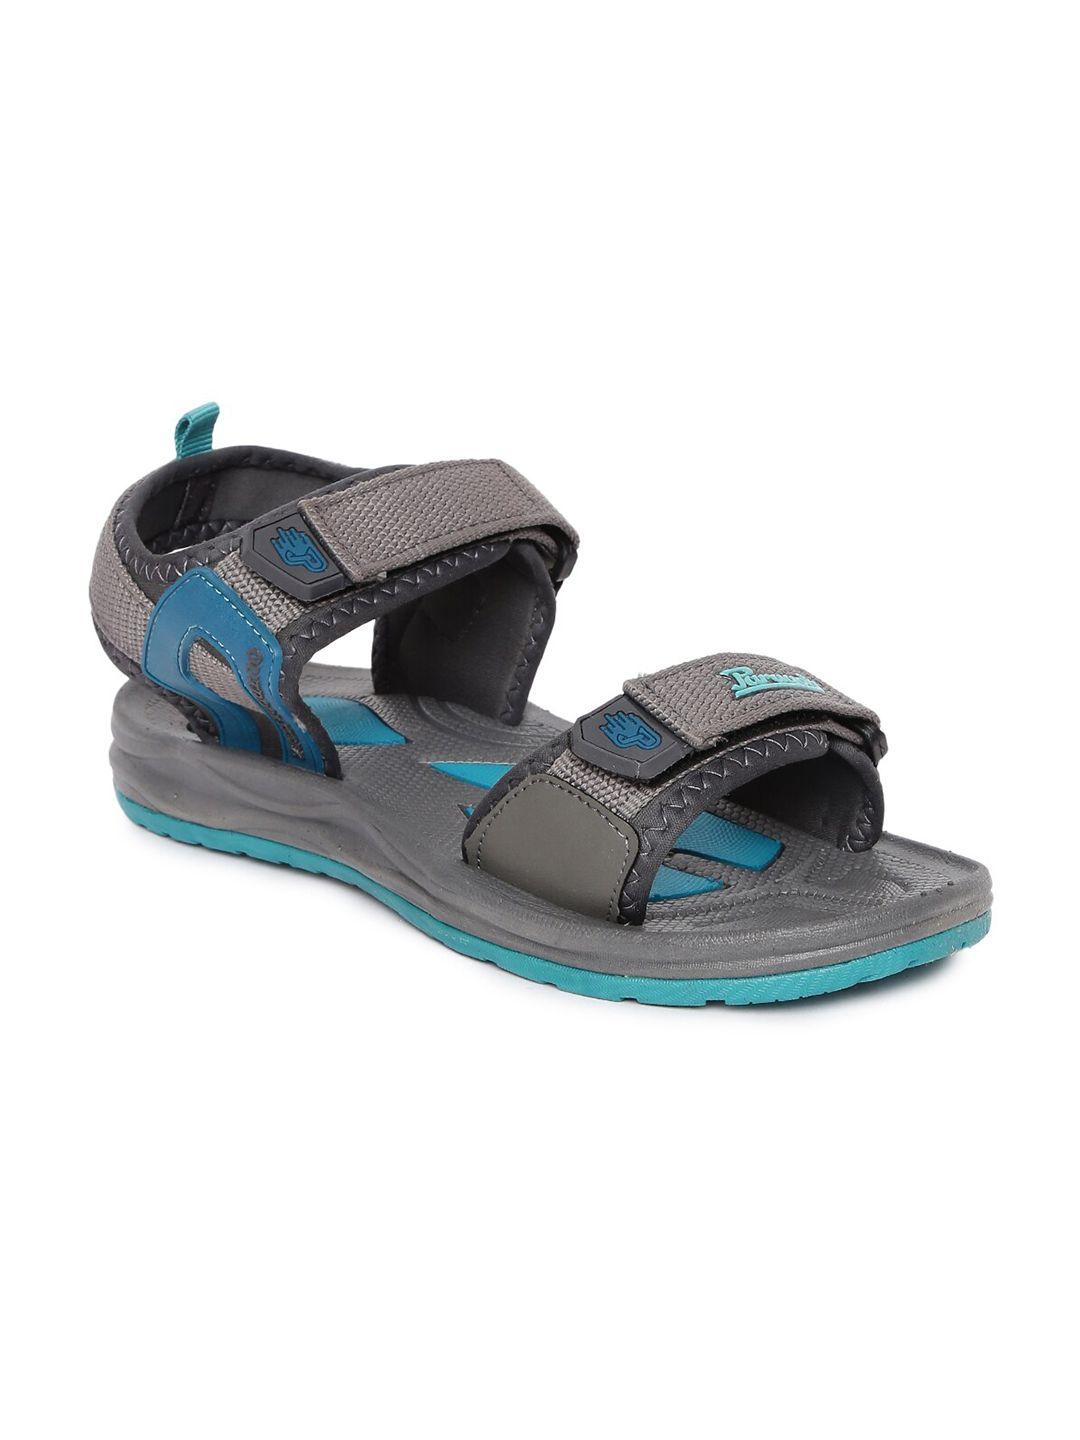 paragon-men-turquoise-blue-&-grey-comfort-sandals